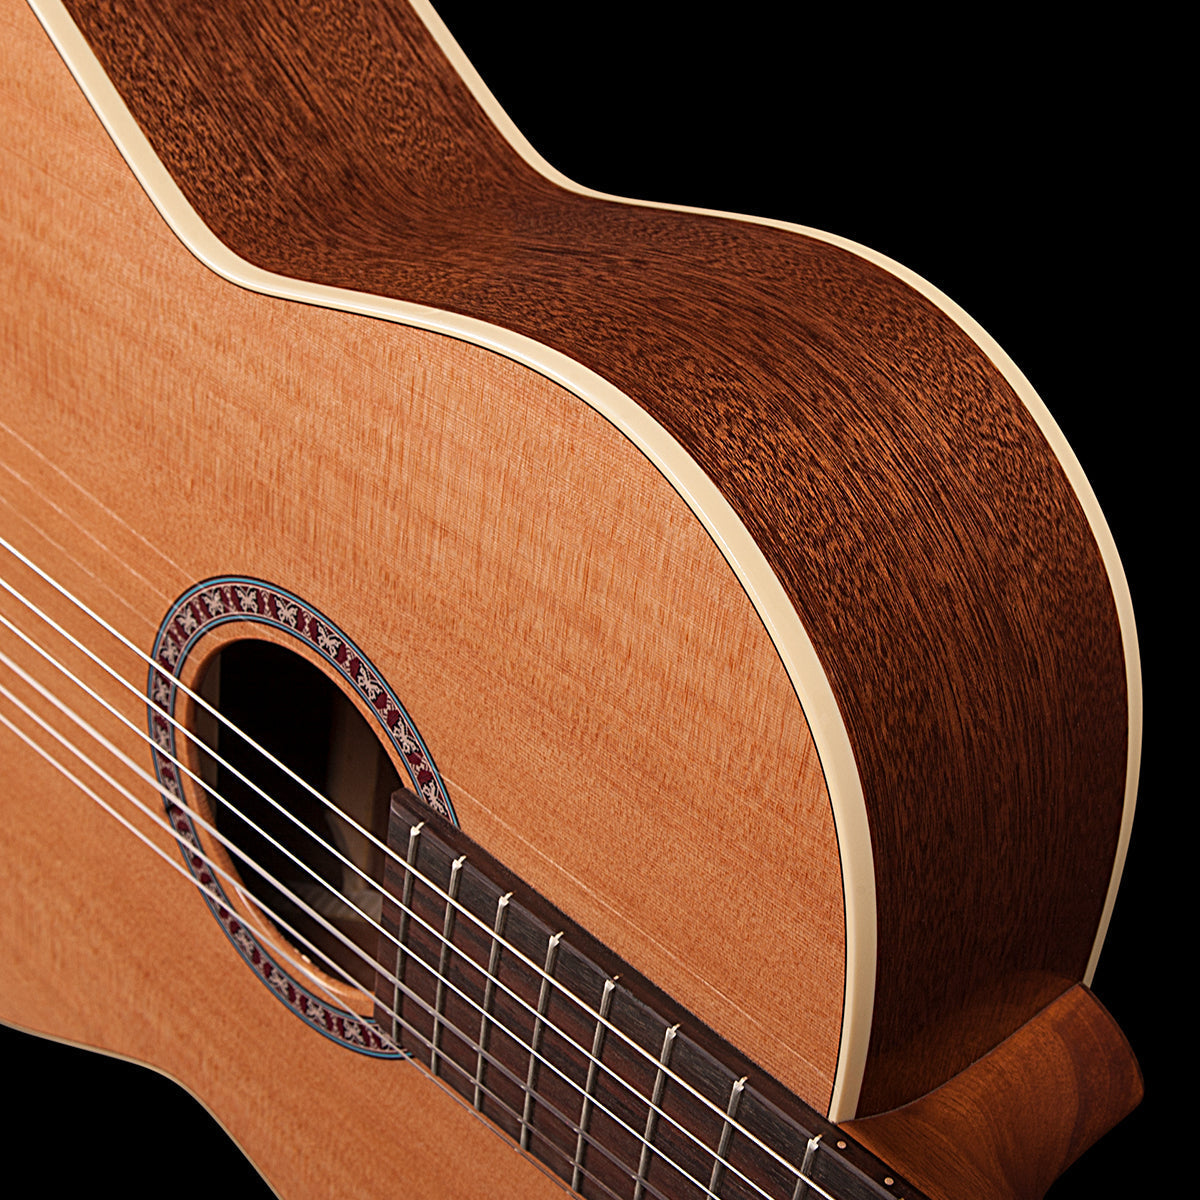 Godin Concert Nylon String Guitar, Acoustic Guitar for sale at Richards Guitars.